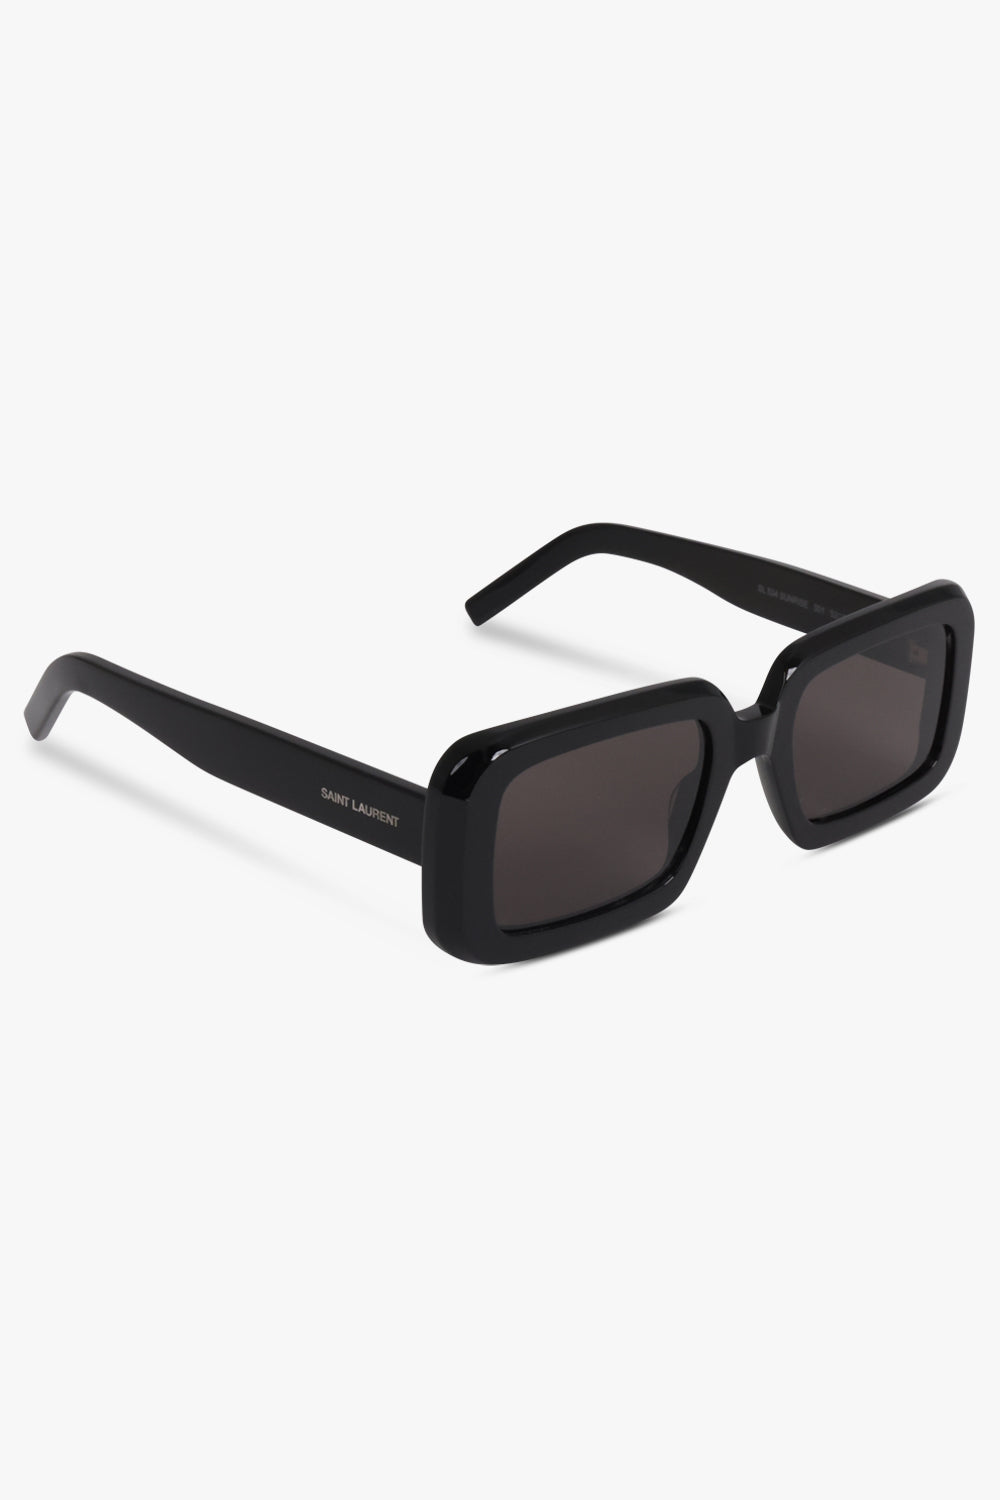 SAINT LAURENT ACCESSORIES BLACK / BLACK-BLACK-BLACK SL 534 SUNRISE Rectangle Frame Sunglasses | Black